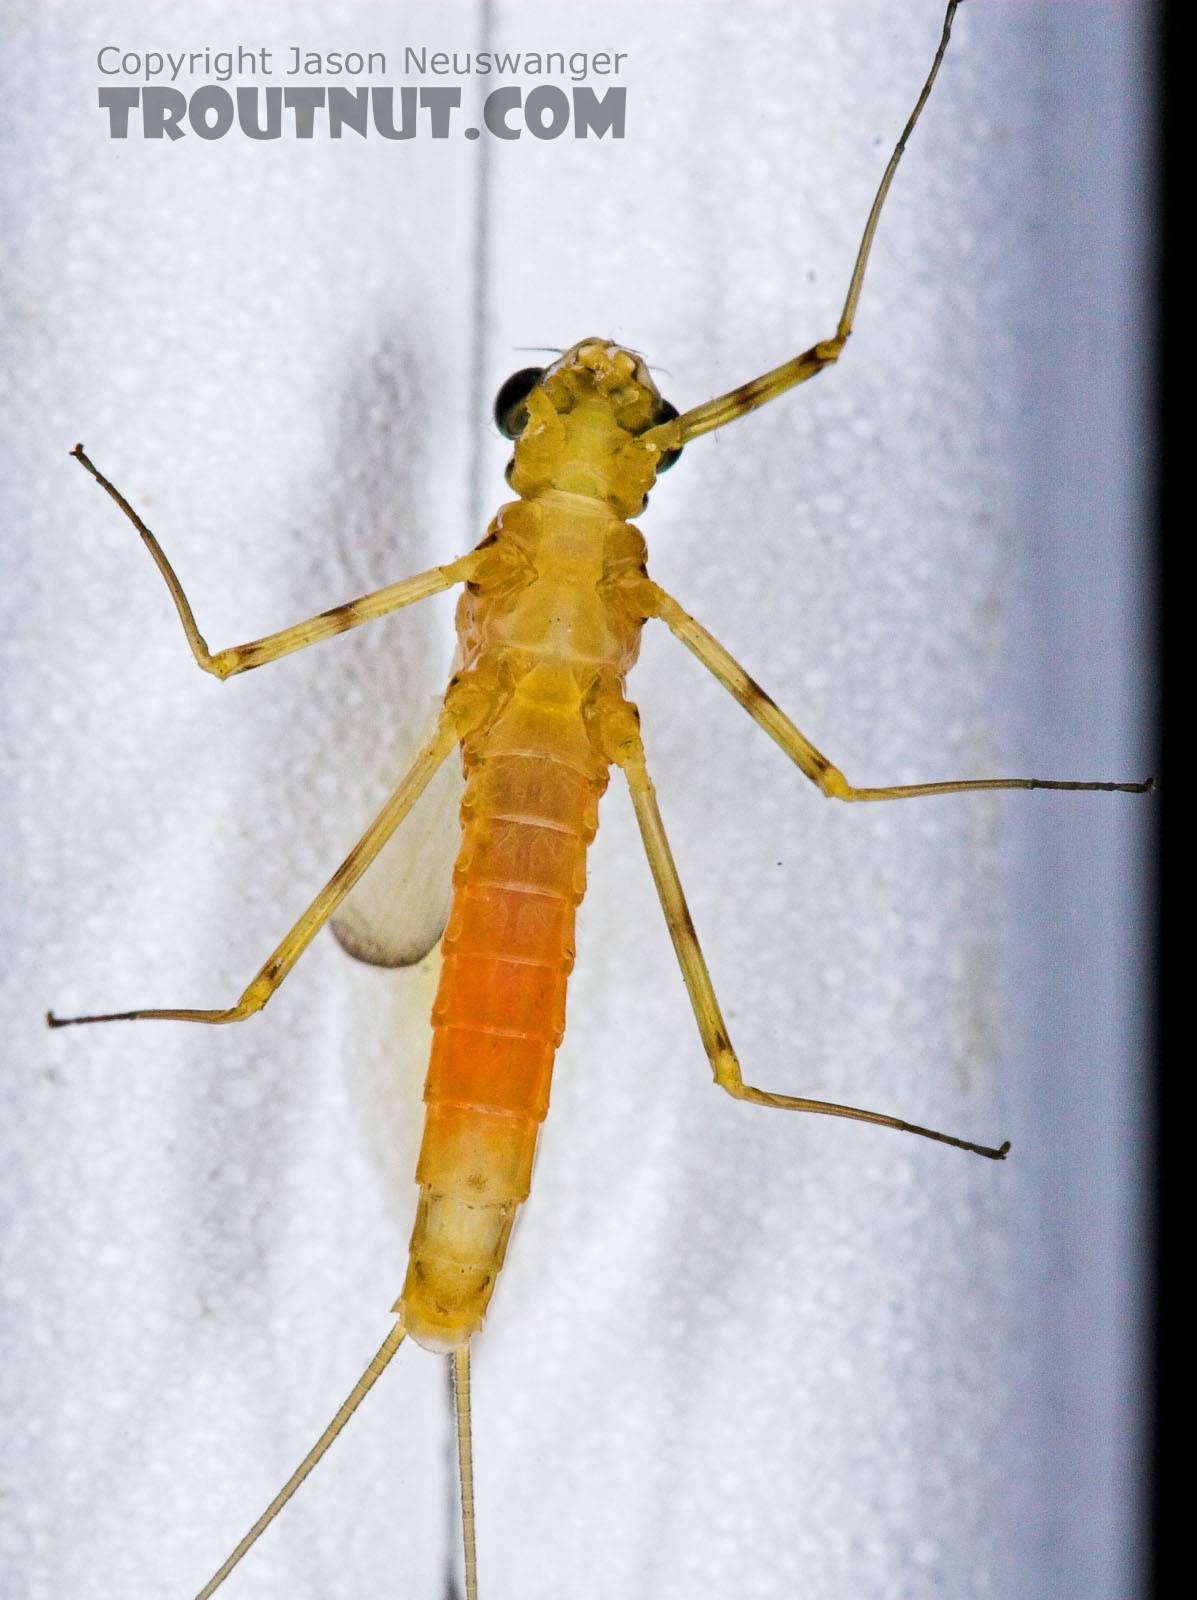 Female Stenacron interpunctatum (Light Cahill) Mayfly Dun from the West Branch of Owego Creek in New York